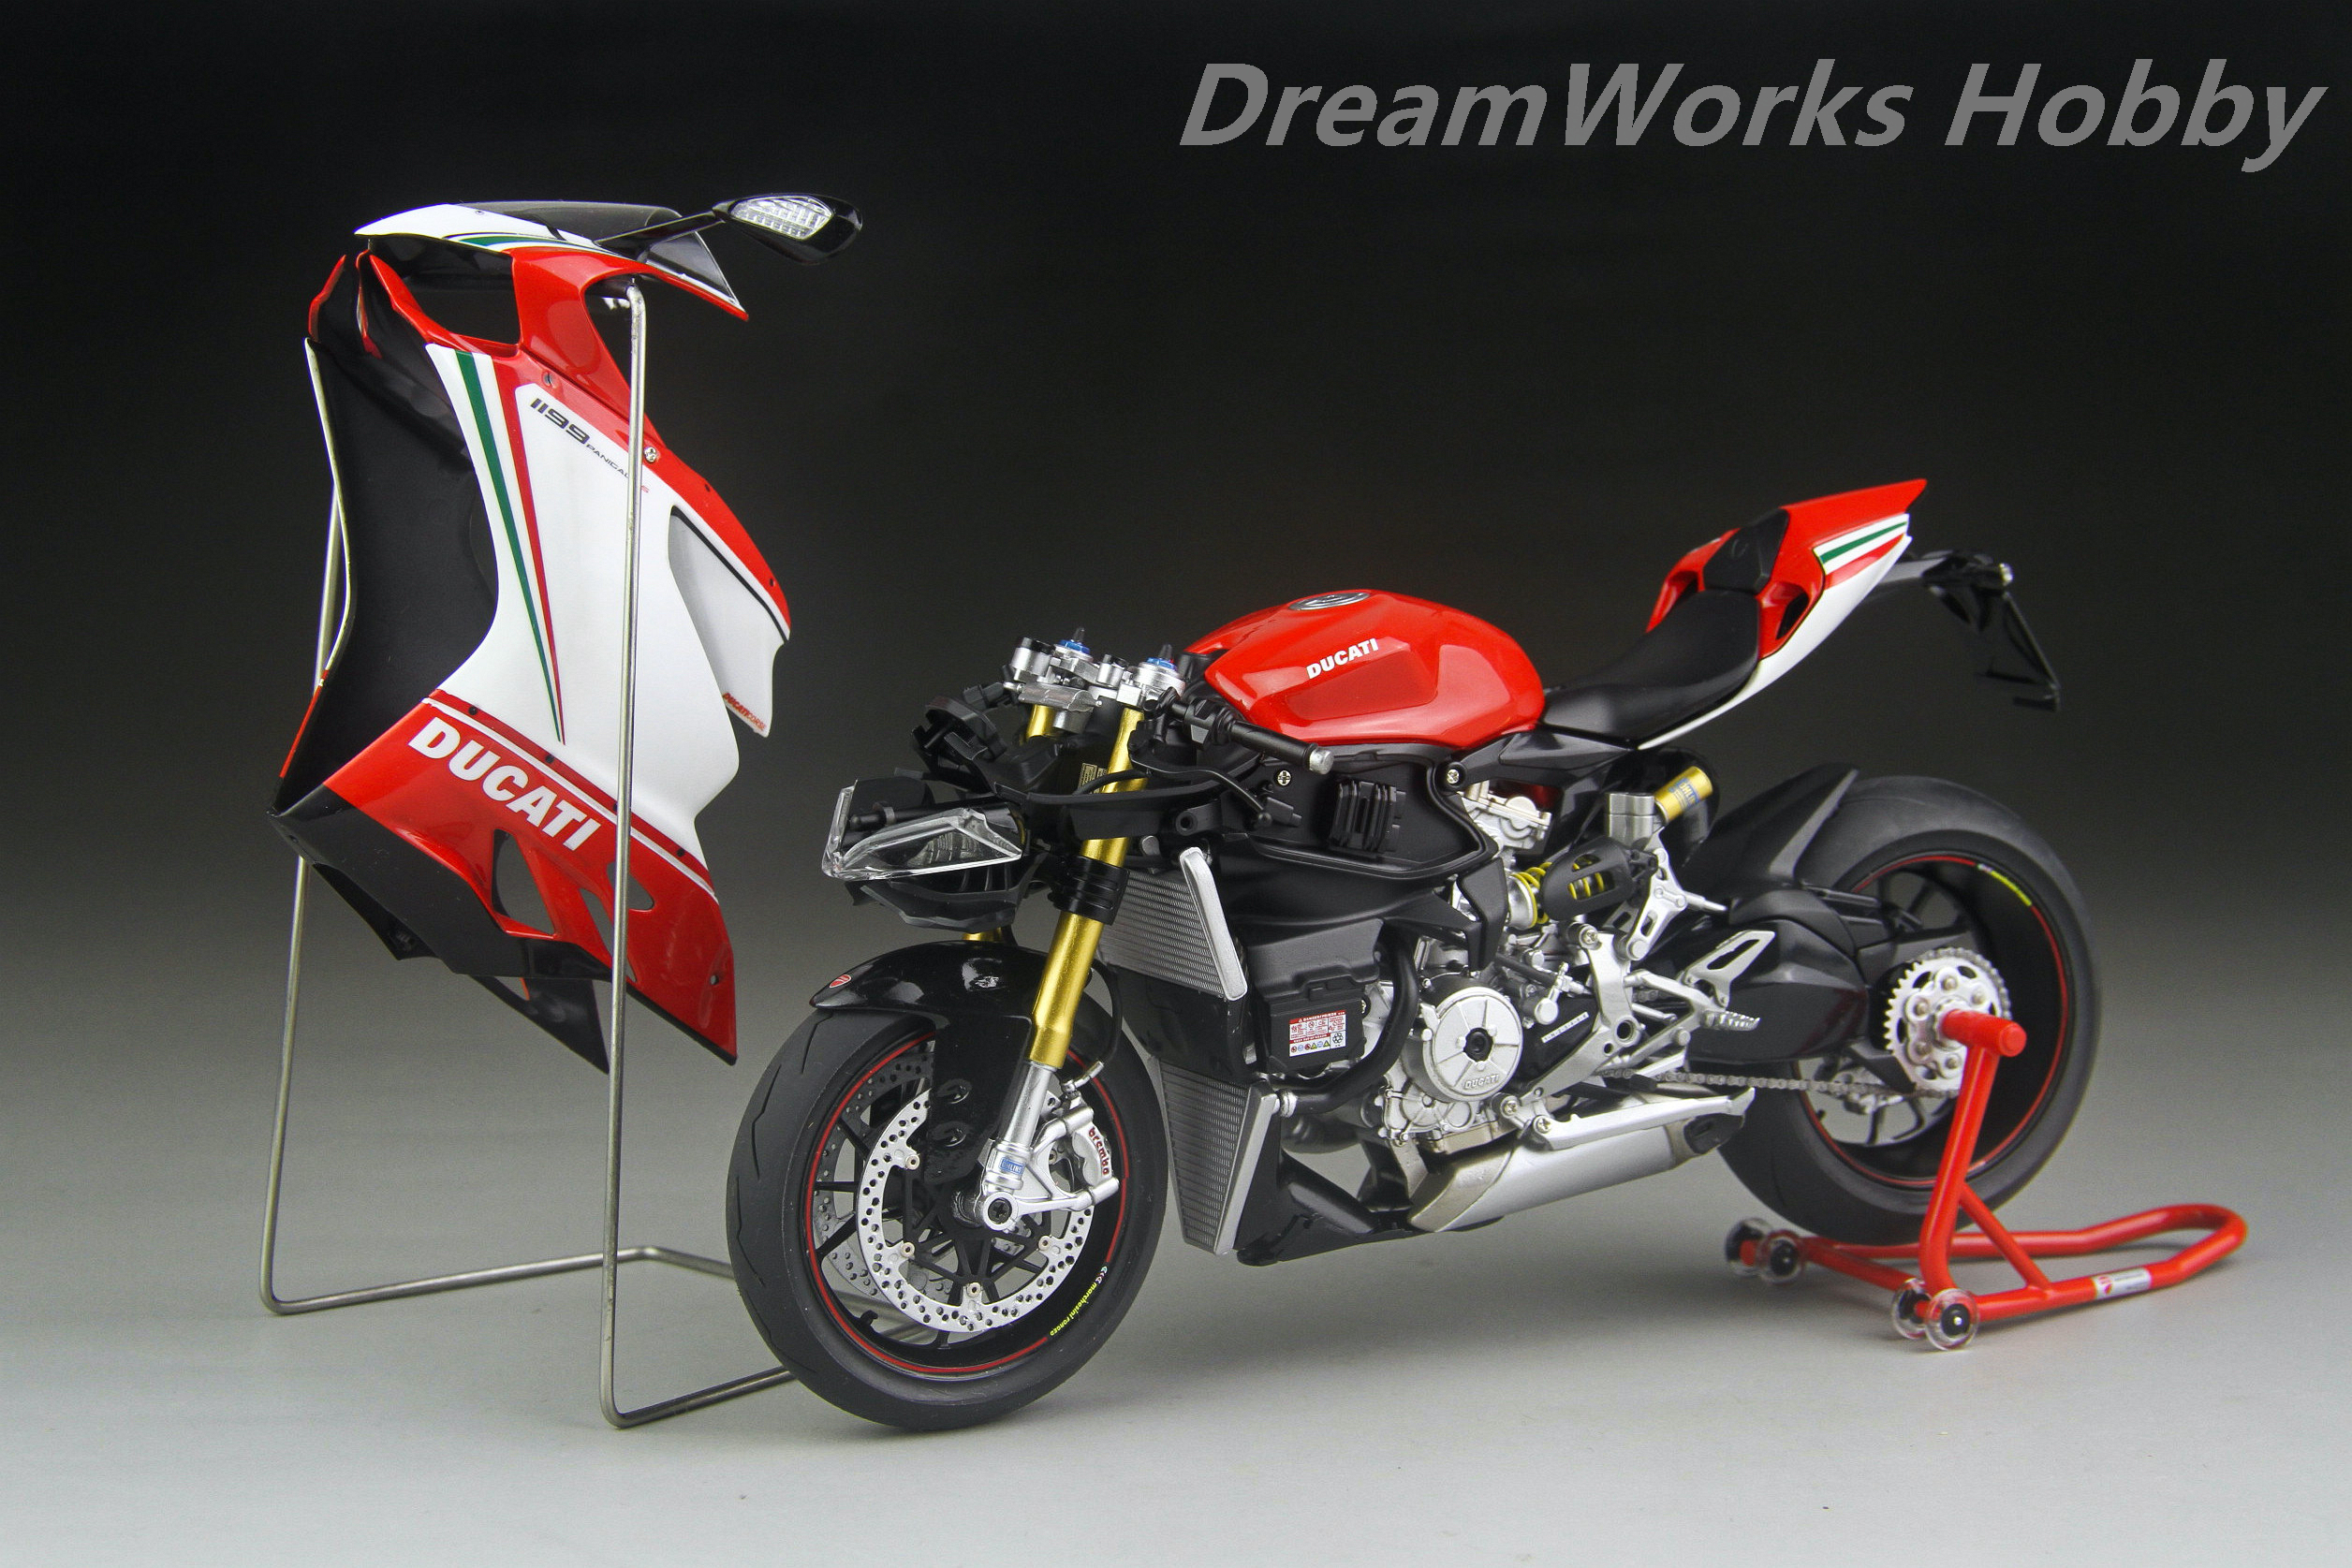 Maquette moto Ducati 1199 Panigale S - Tamiya 14129 - 1/12